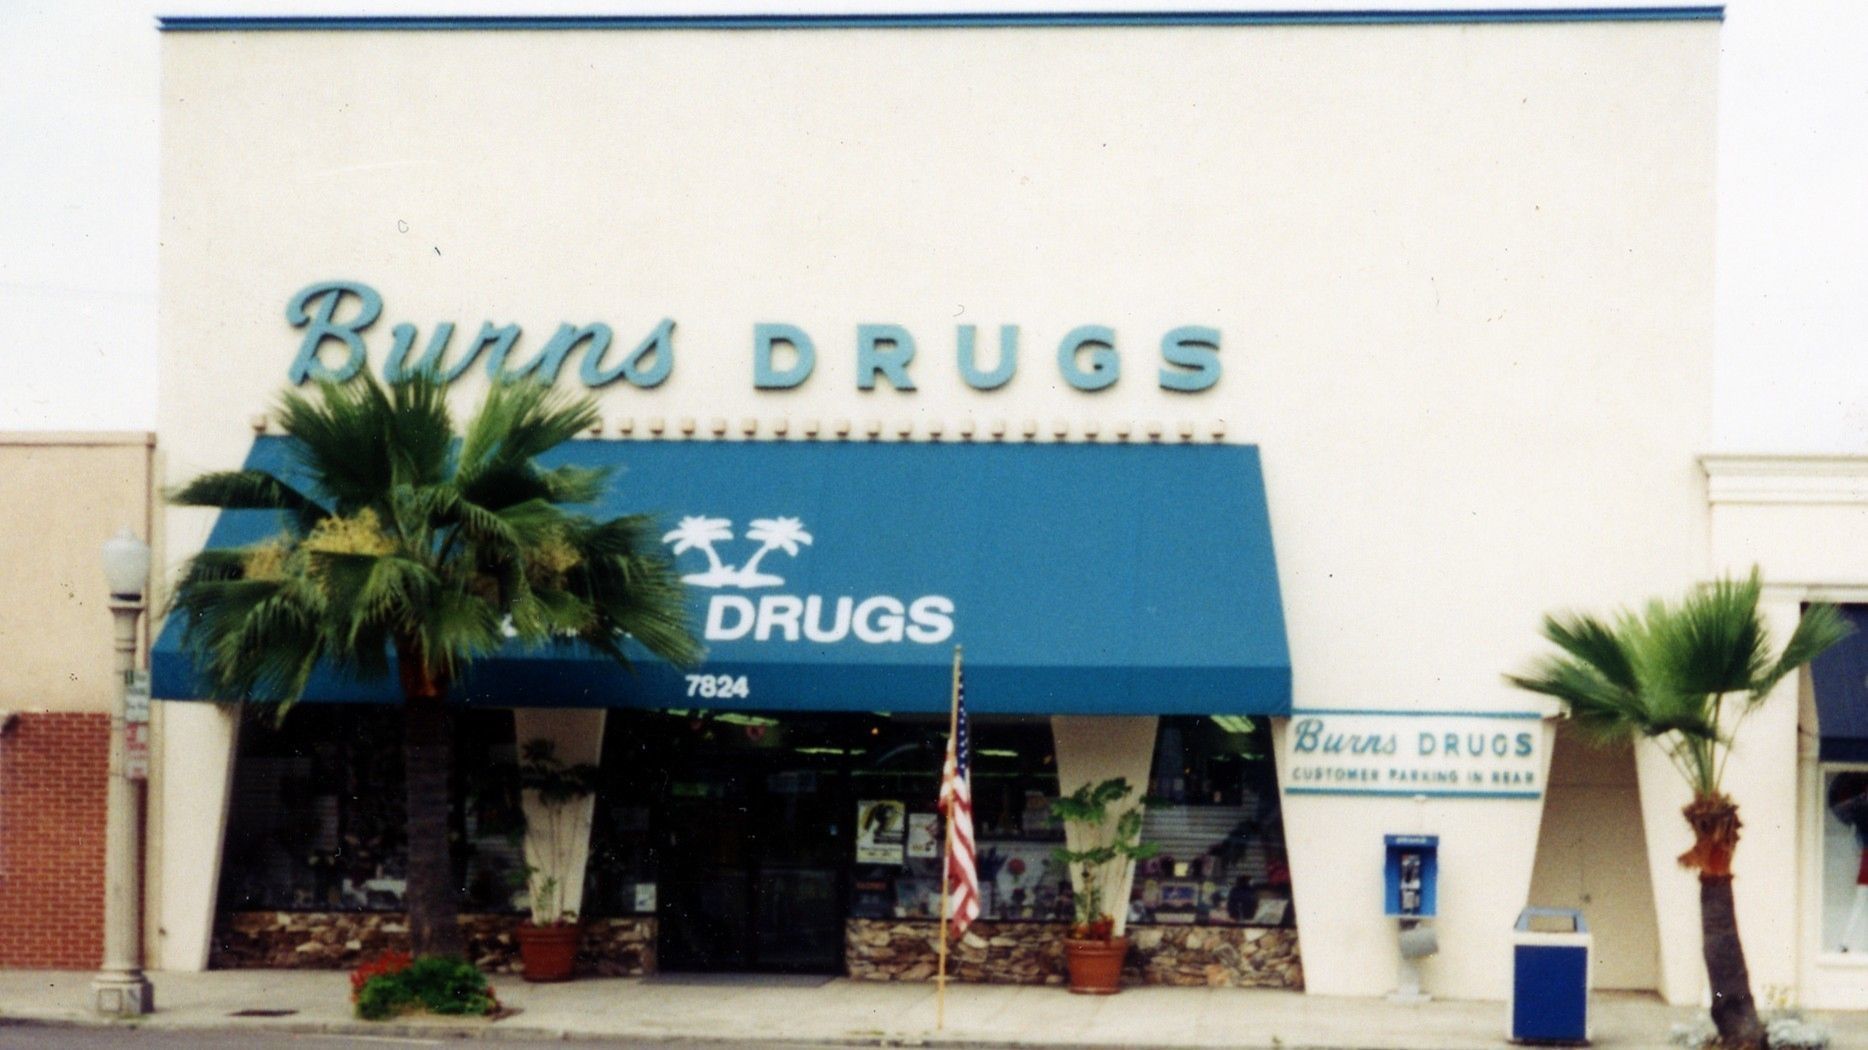 Burns Drugs functioned as a social hub for La Jollans.